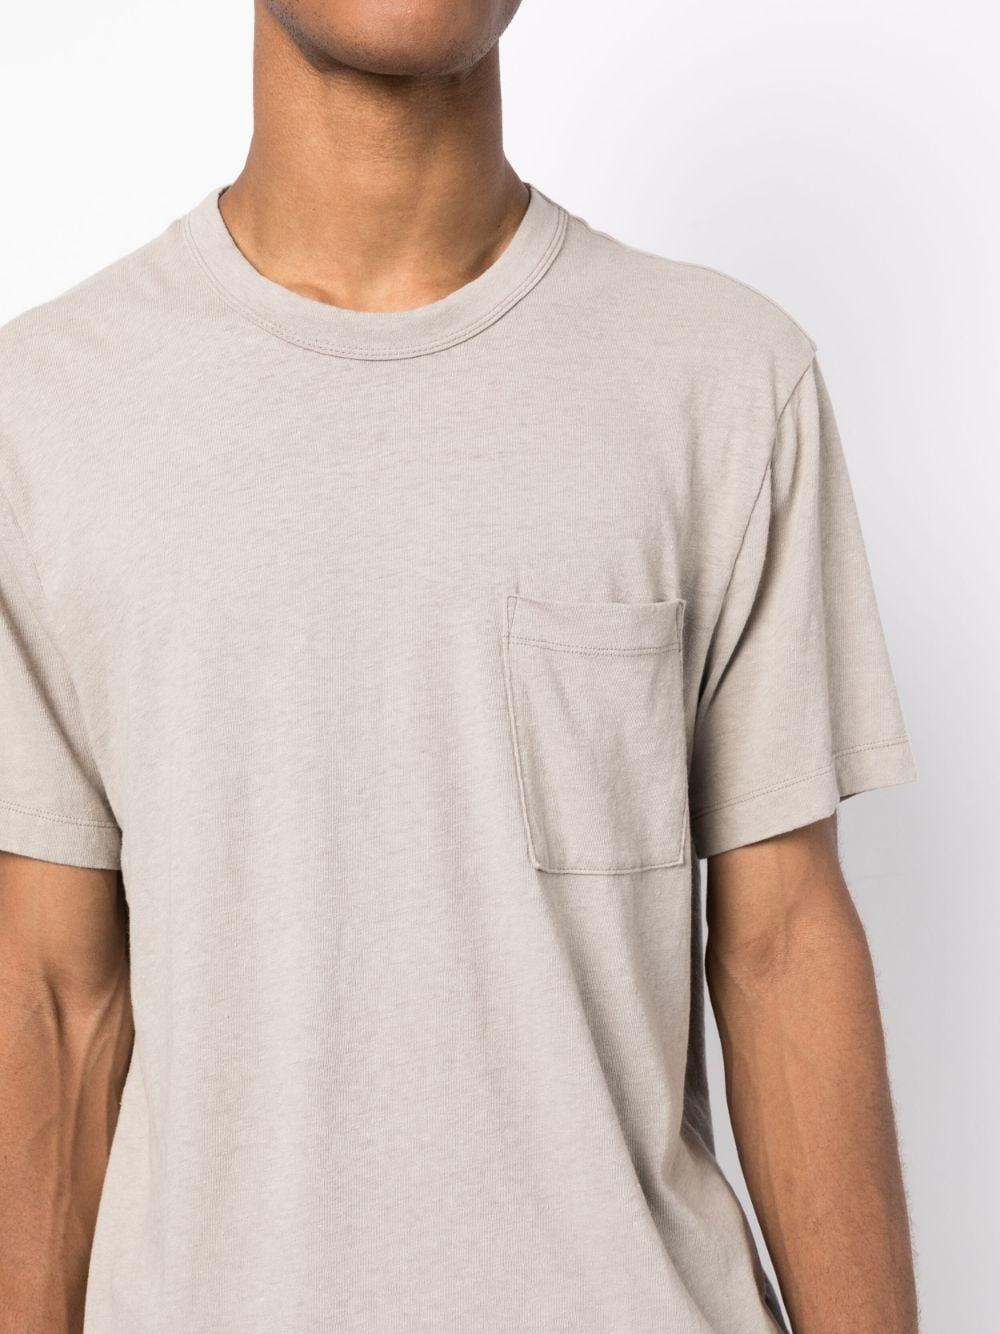 Konflikt innovation Perennial James Perse Venice Beach Short-sleeved T-shirt in Gray for Men | Lyst